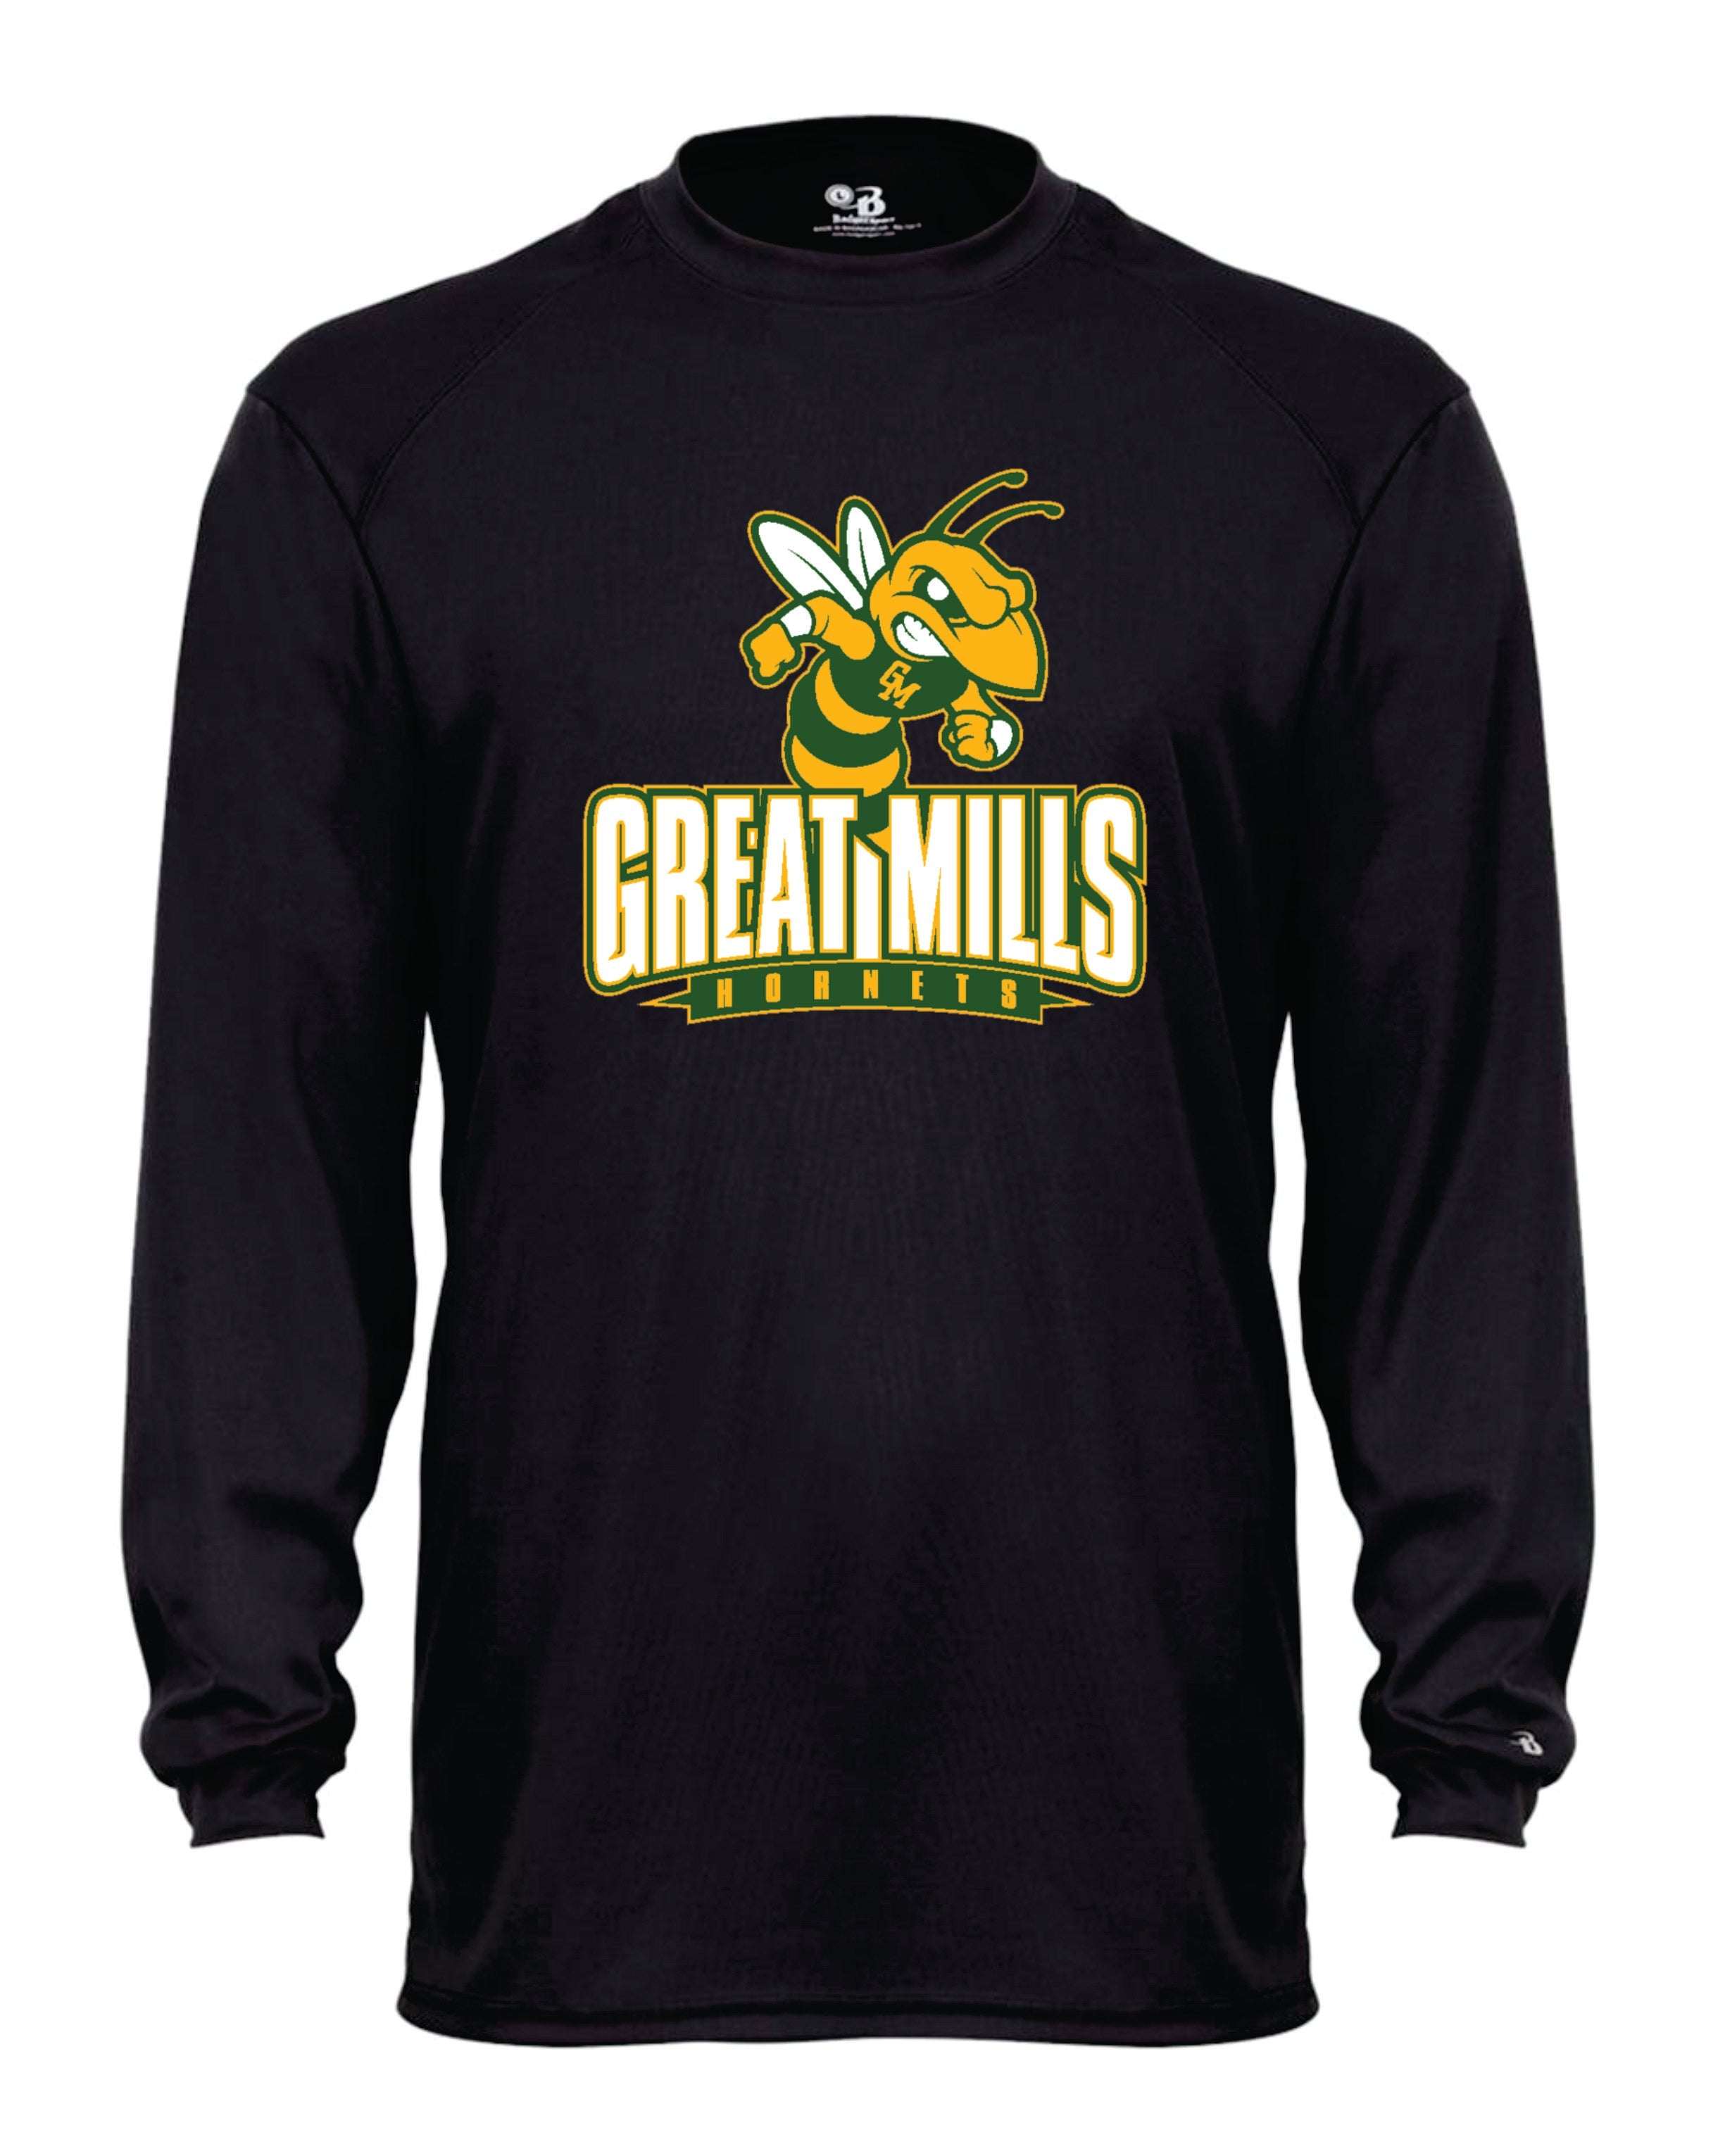 Great Mills Cross Country Long Sleeve Badger Dri Fit Shirt - WOMEN